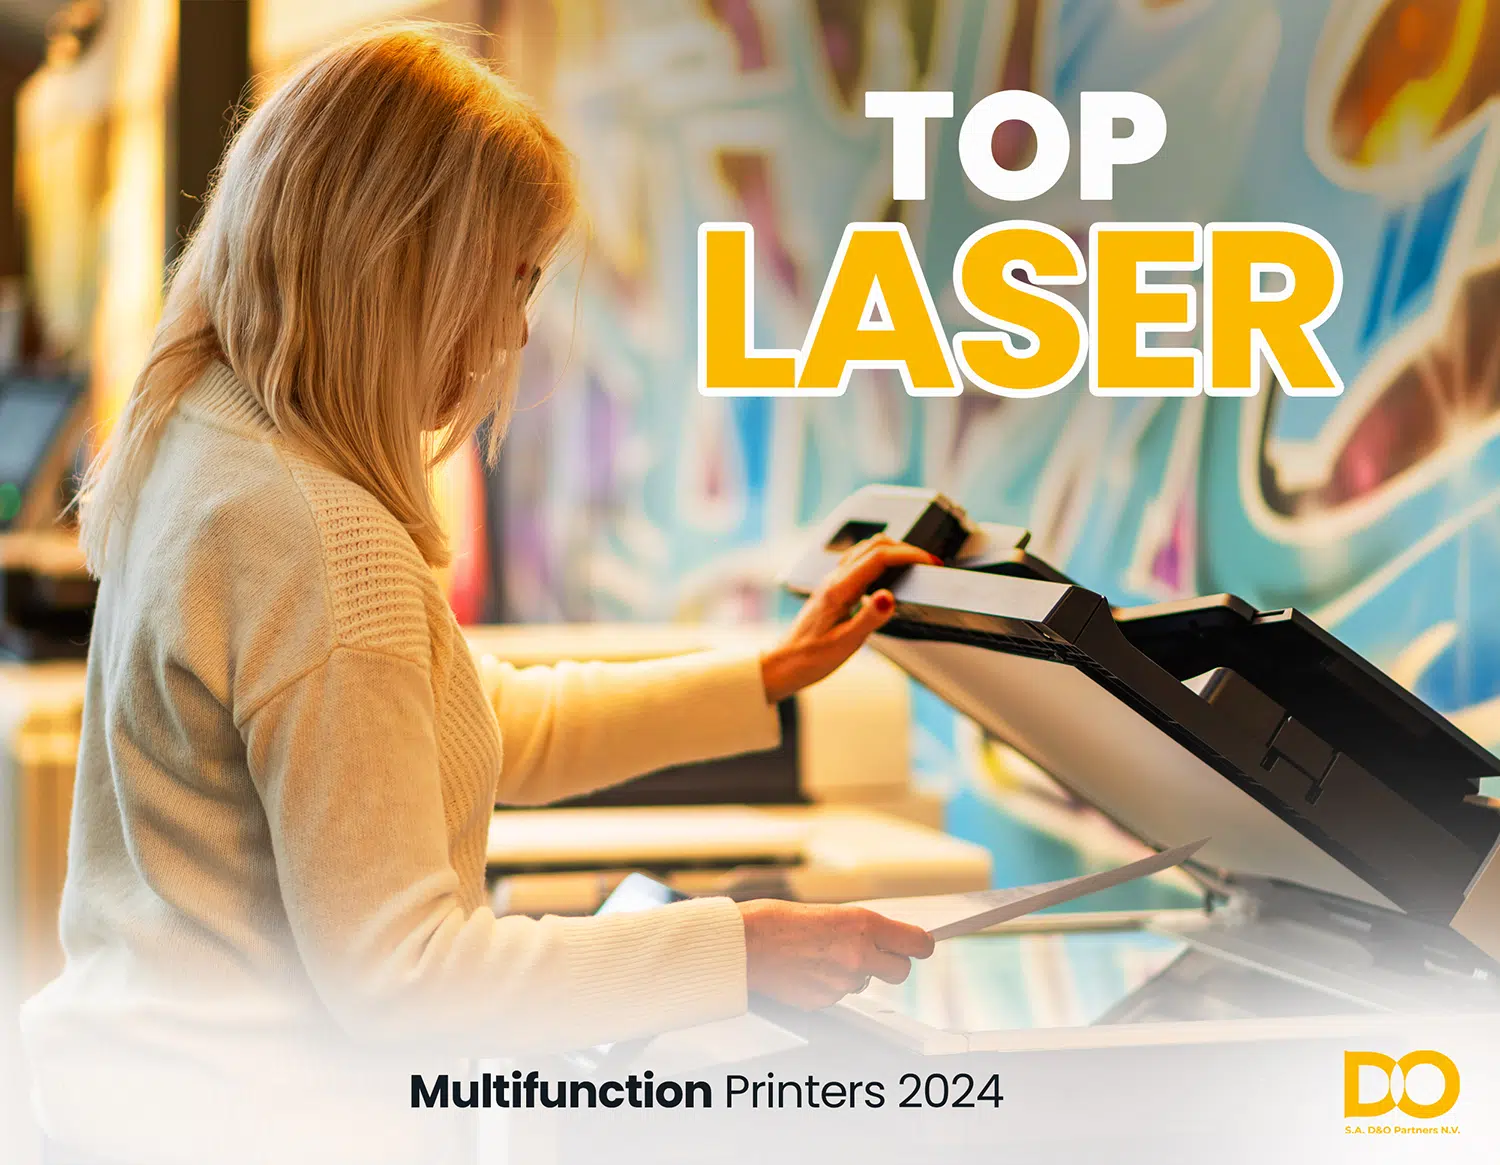 Do Partners Best Laserprinter Sme Do